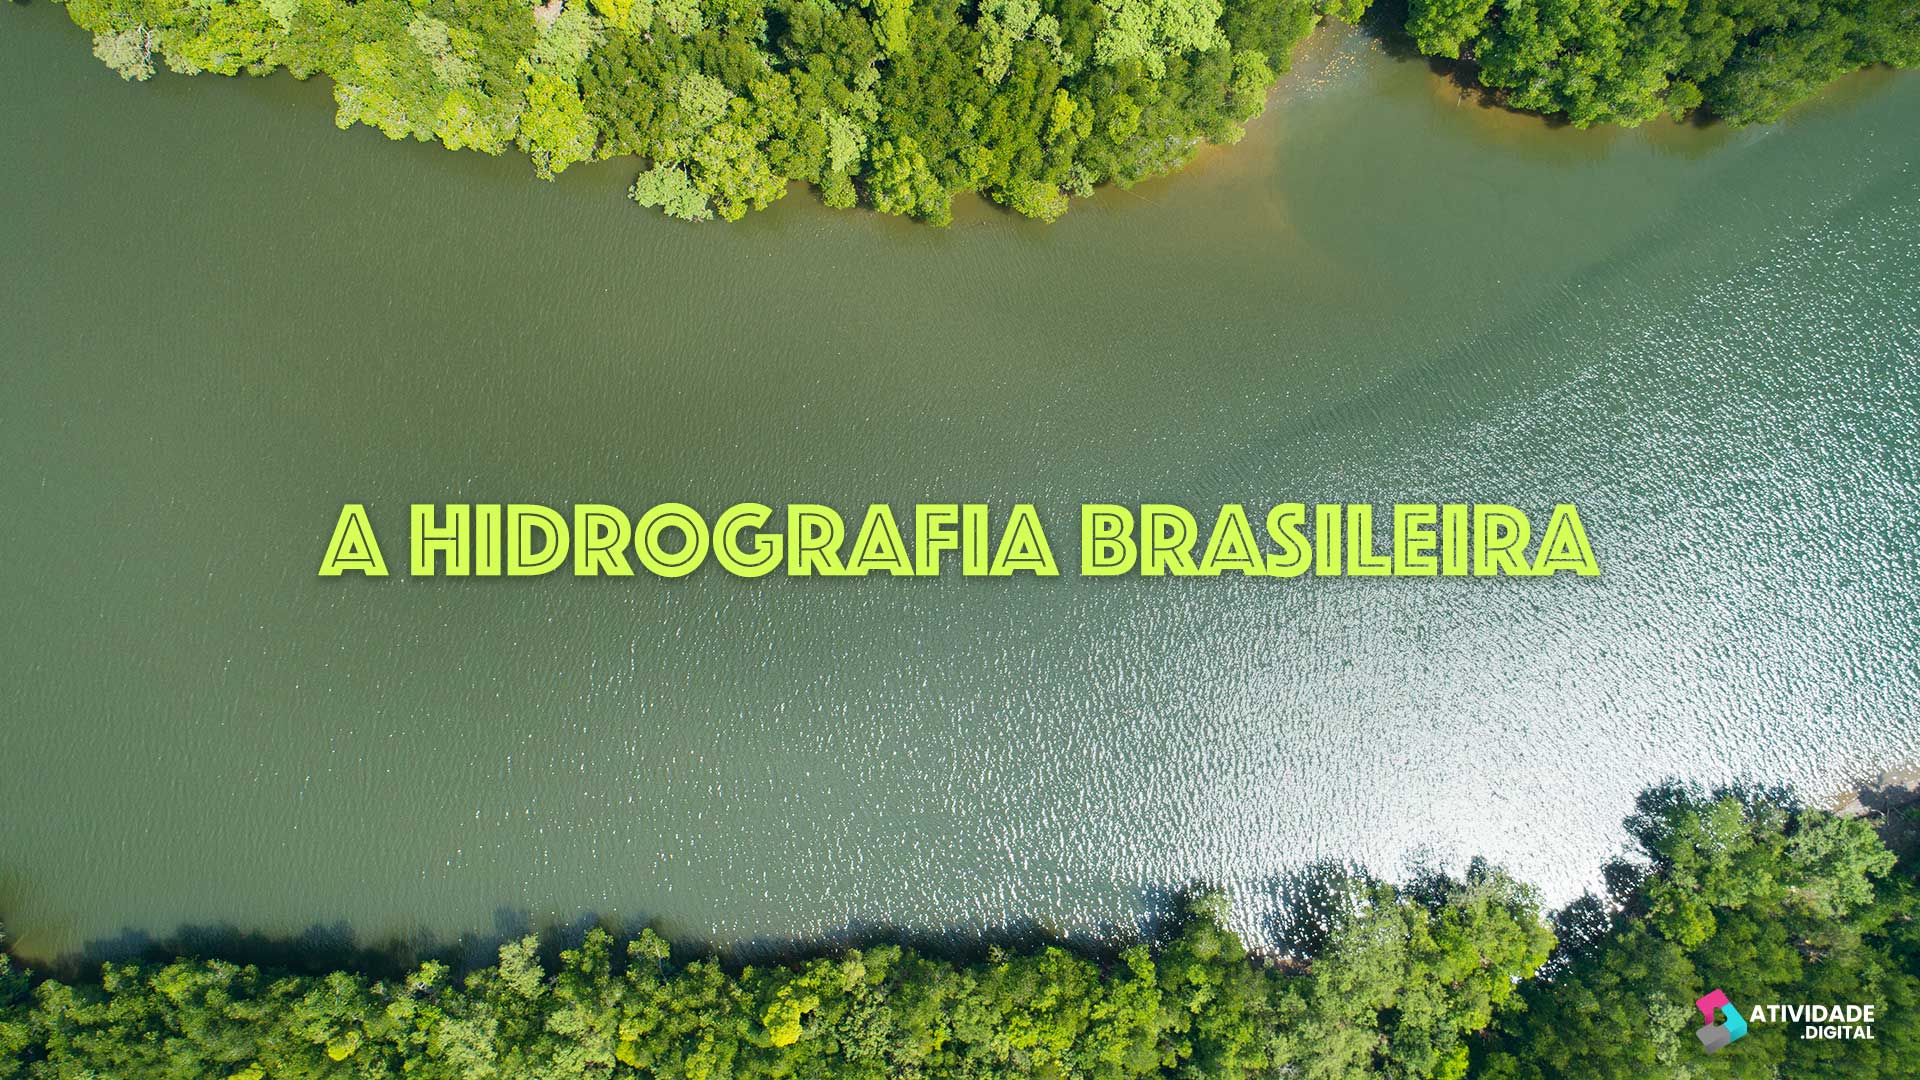  A hidrografia brasileira